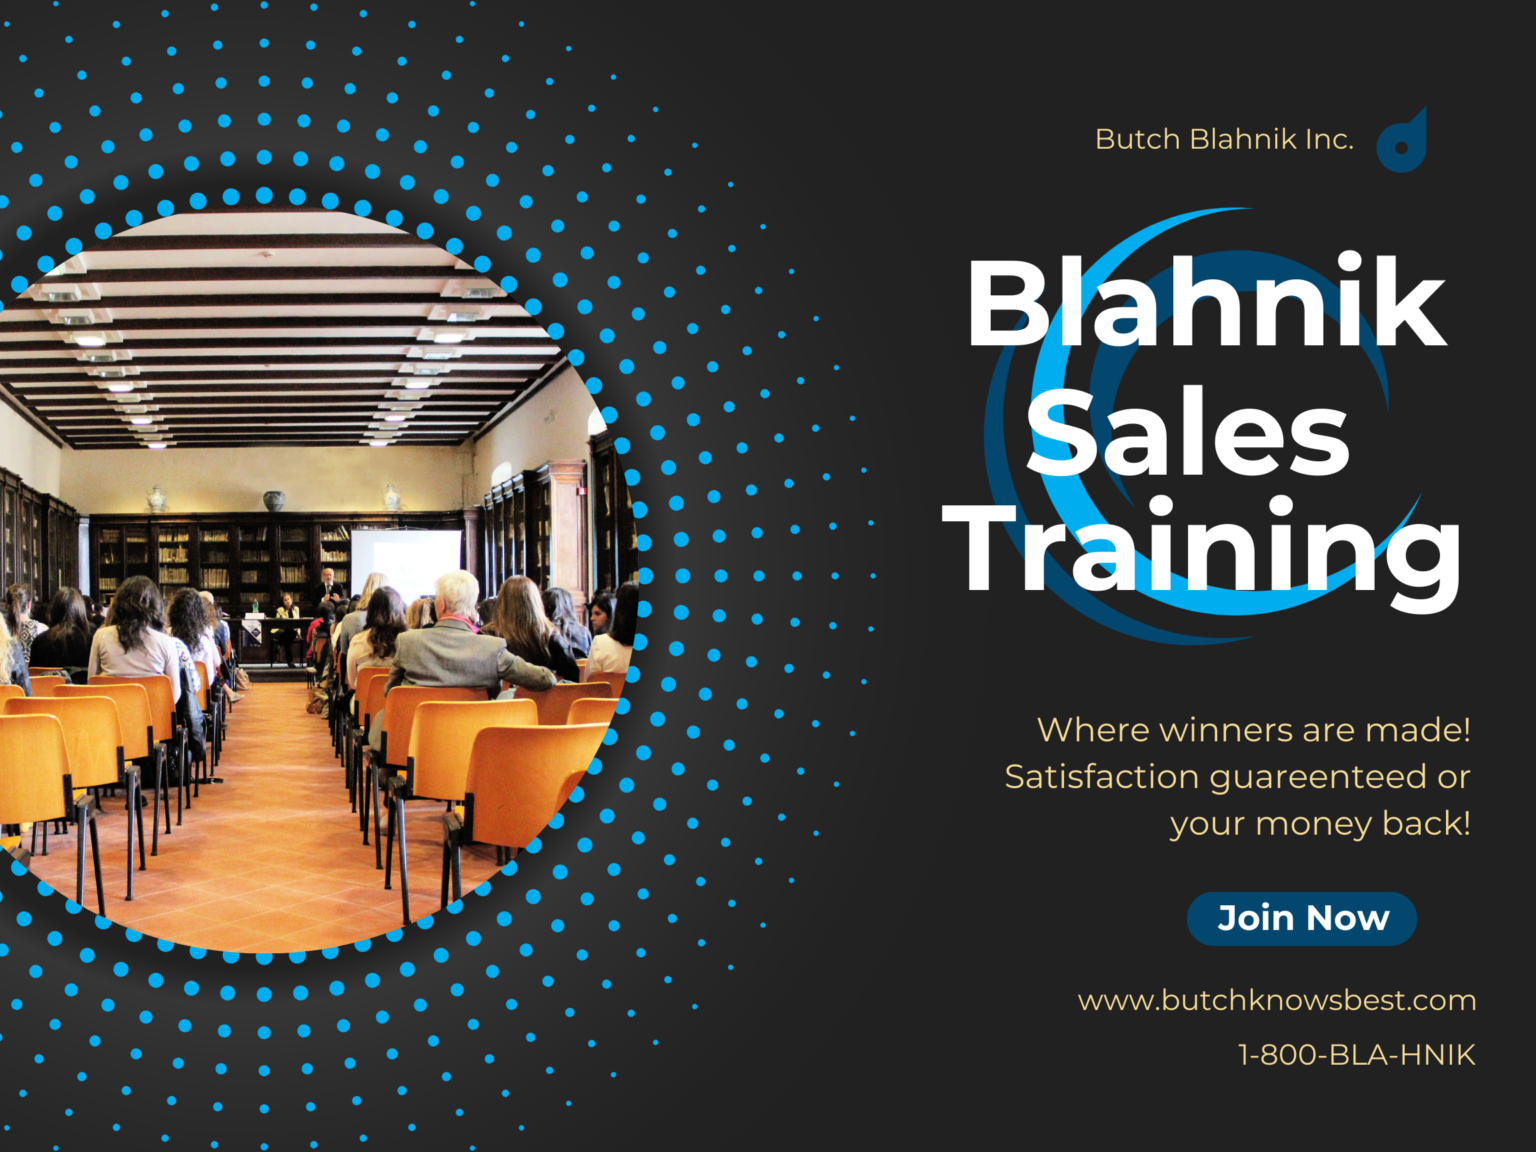 Blahnik Sales Training Flyer